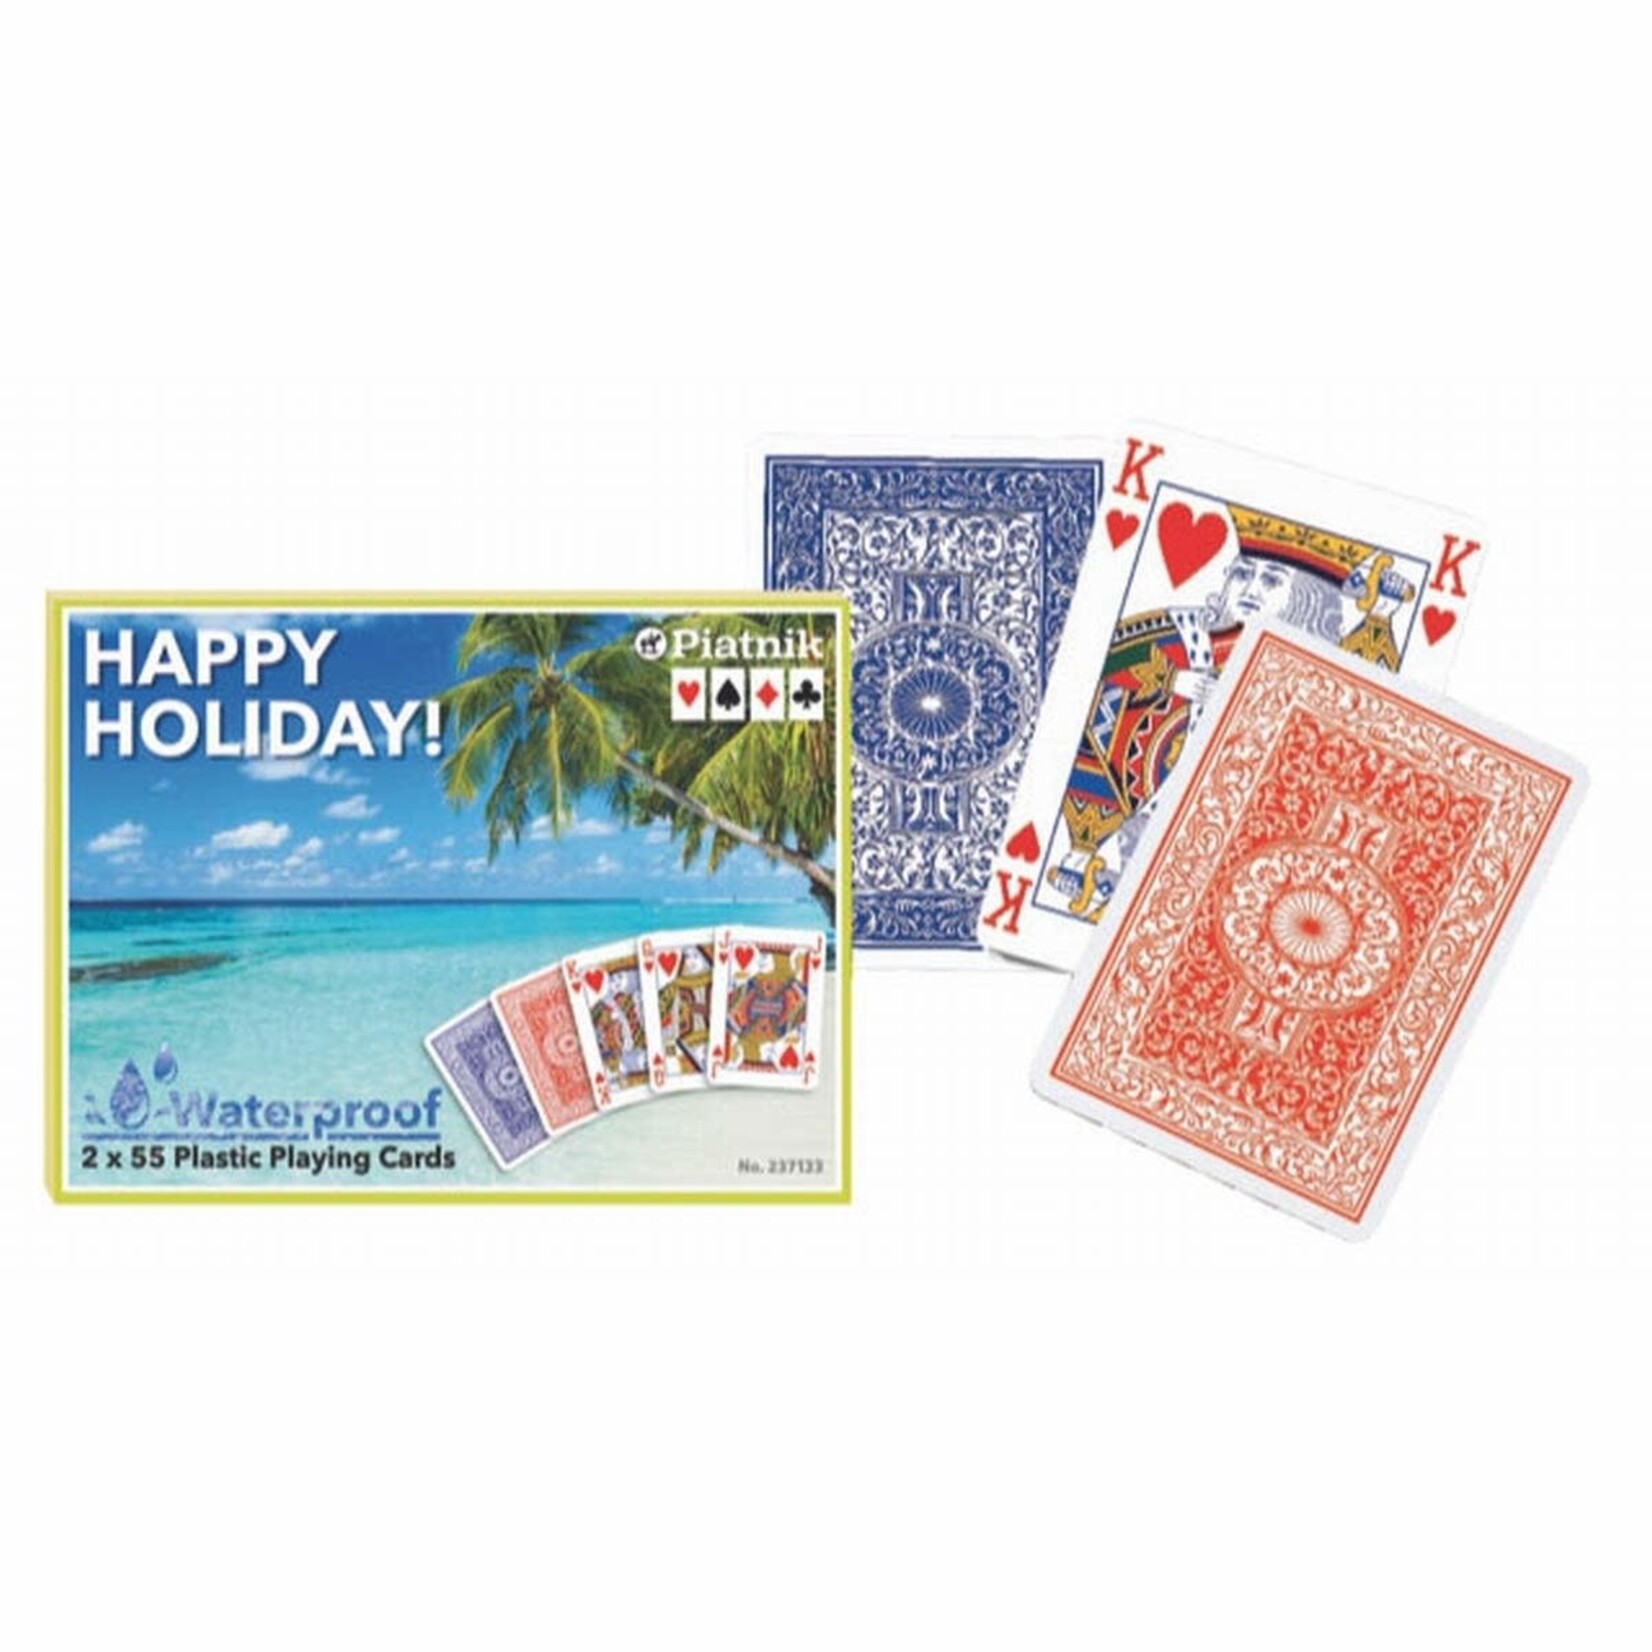 Piatnik Piatnik - Cartes Poker "Happy Holiday!" 100% Plastique Waterproof 2-Pack